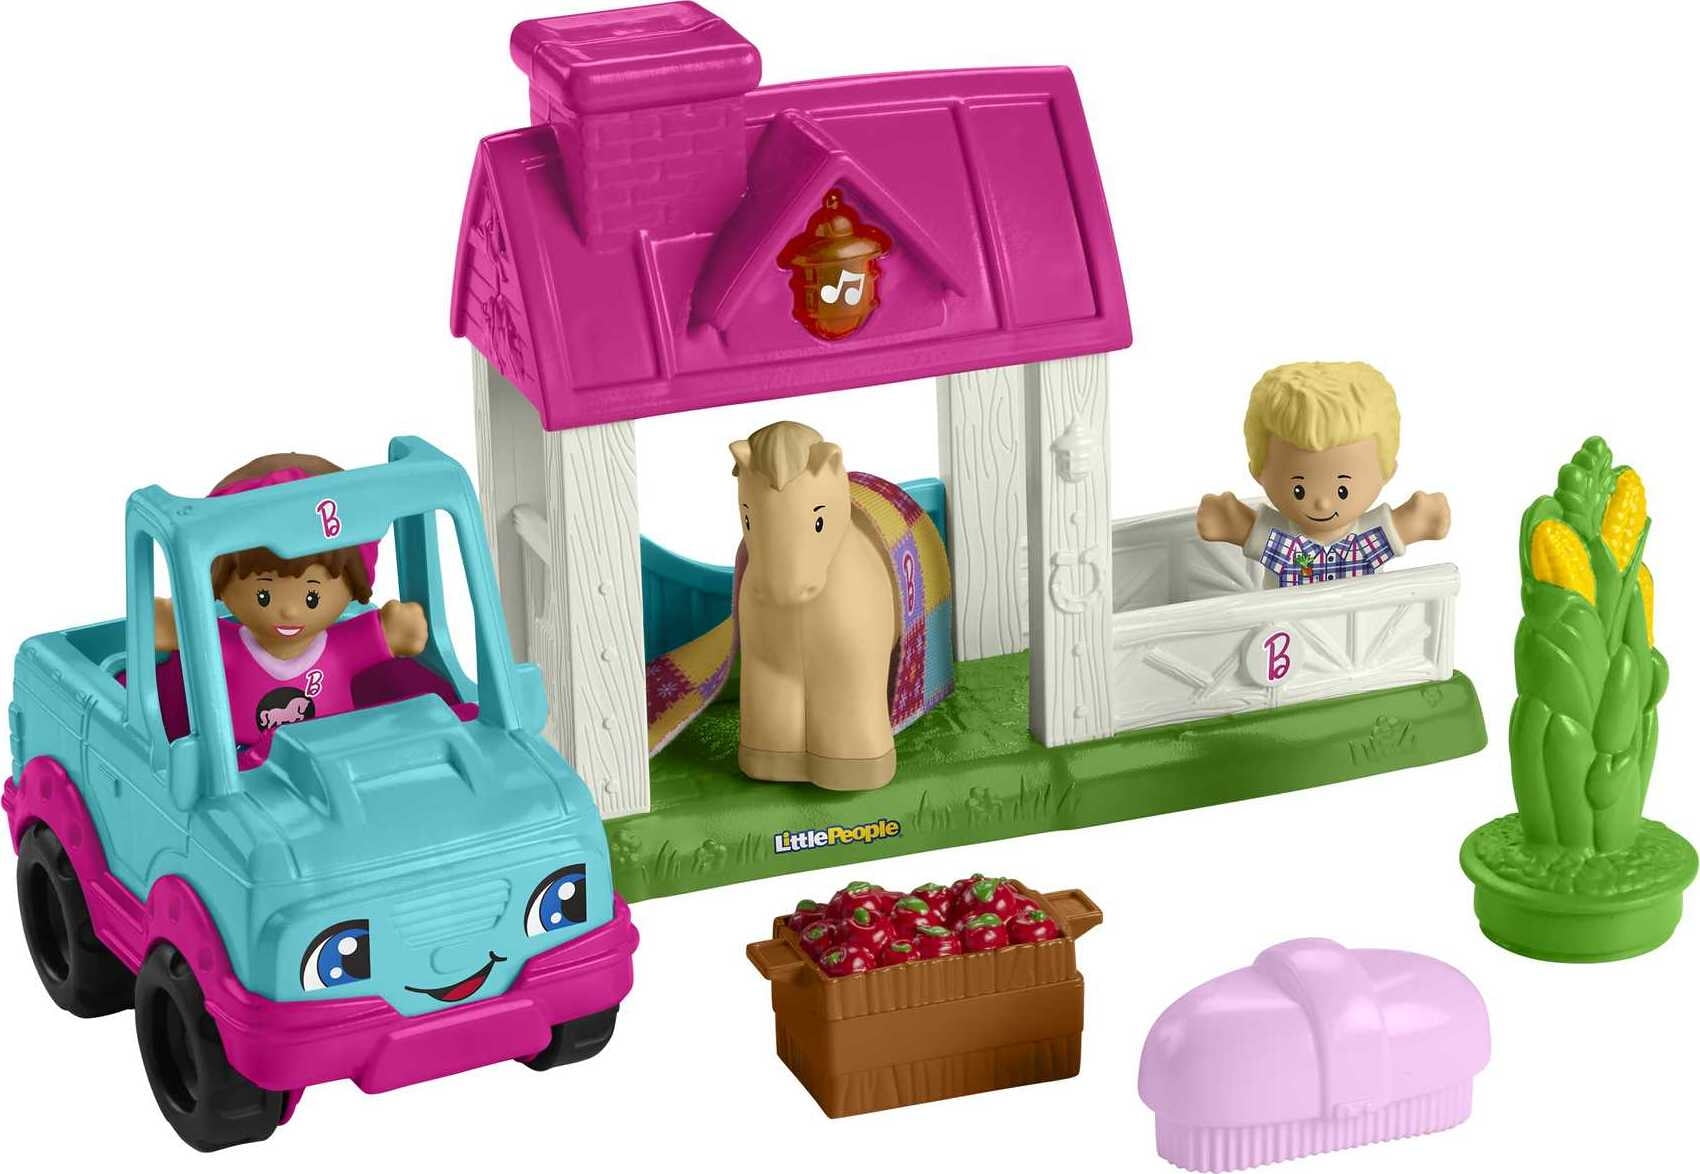 Opmærksomhed Sober veltalende Fisher-Price Little People Barbie Horse Stable Toddler Playset with Light  Sounds & 7 Pieces - Walmart.com